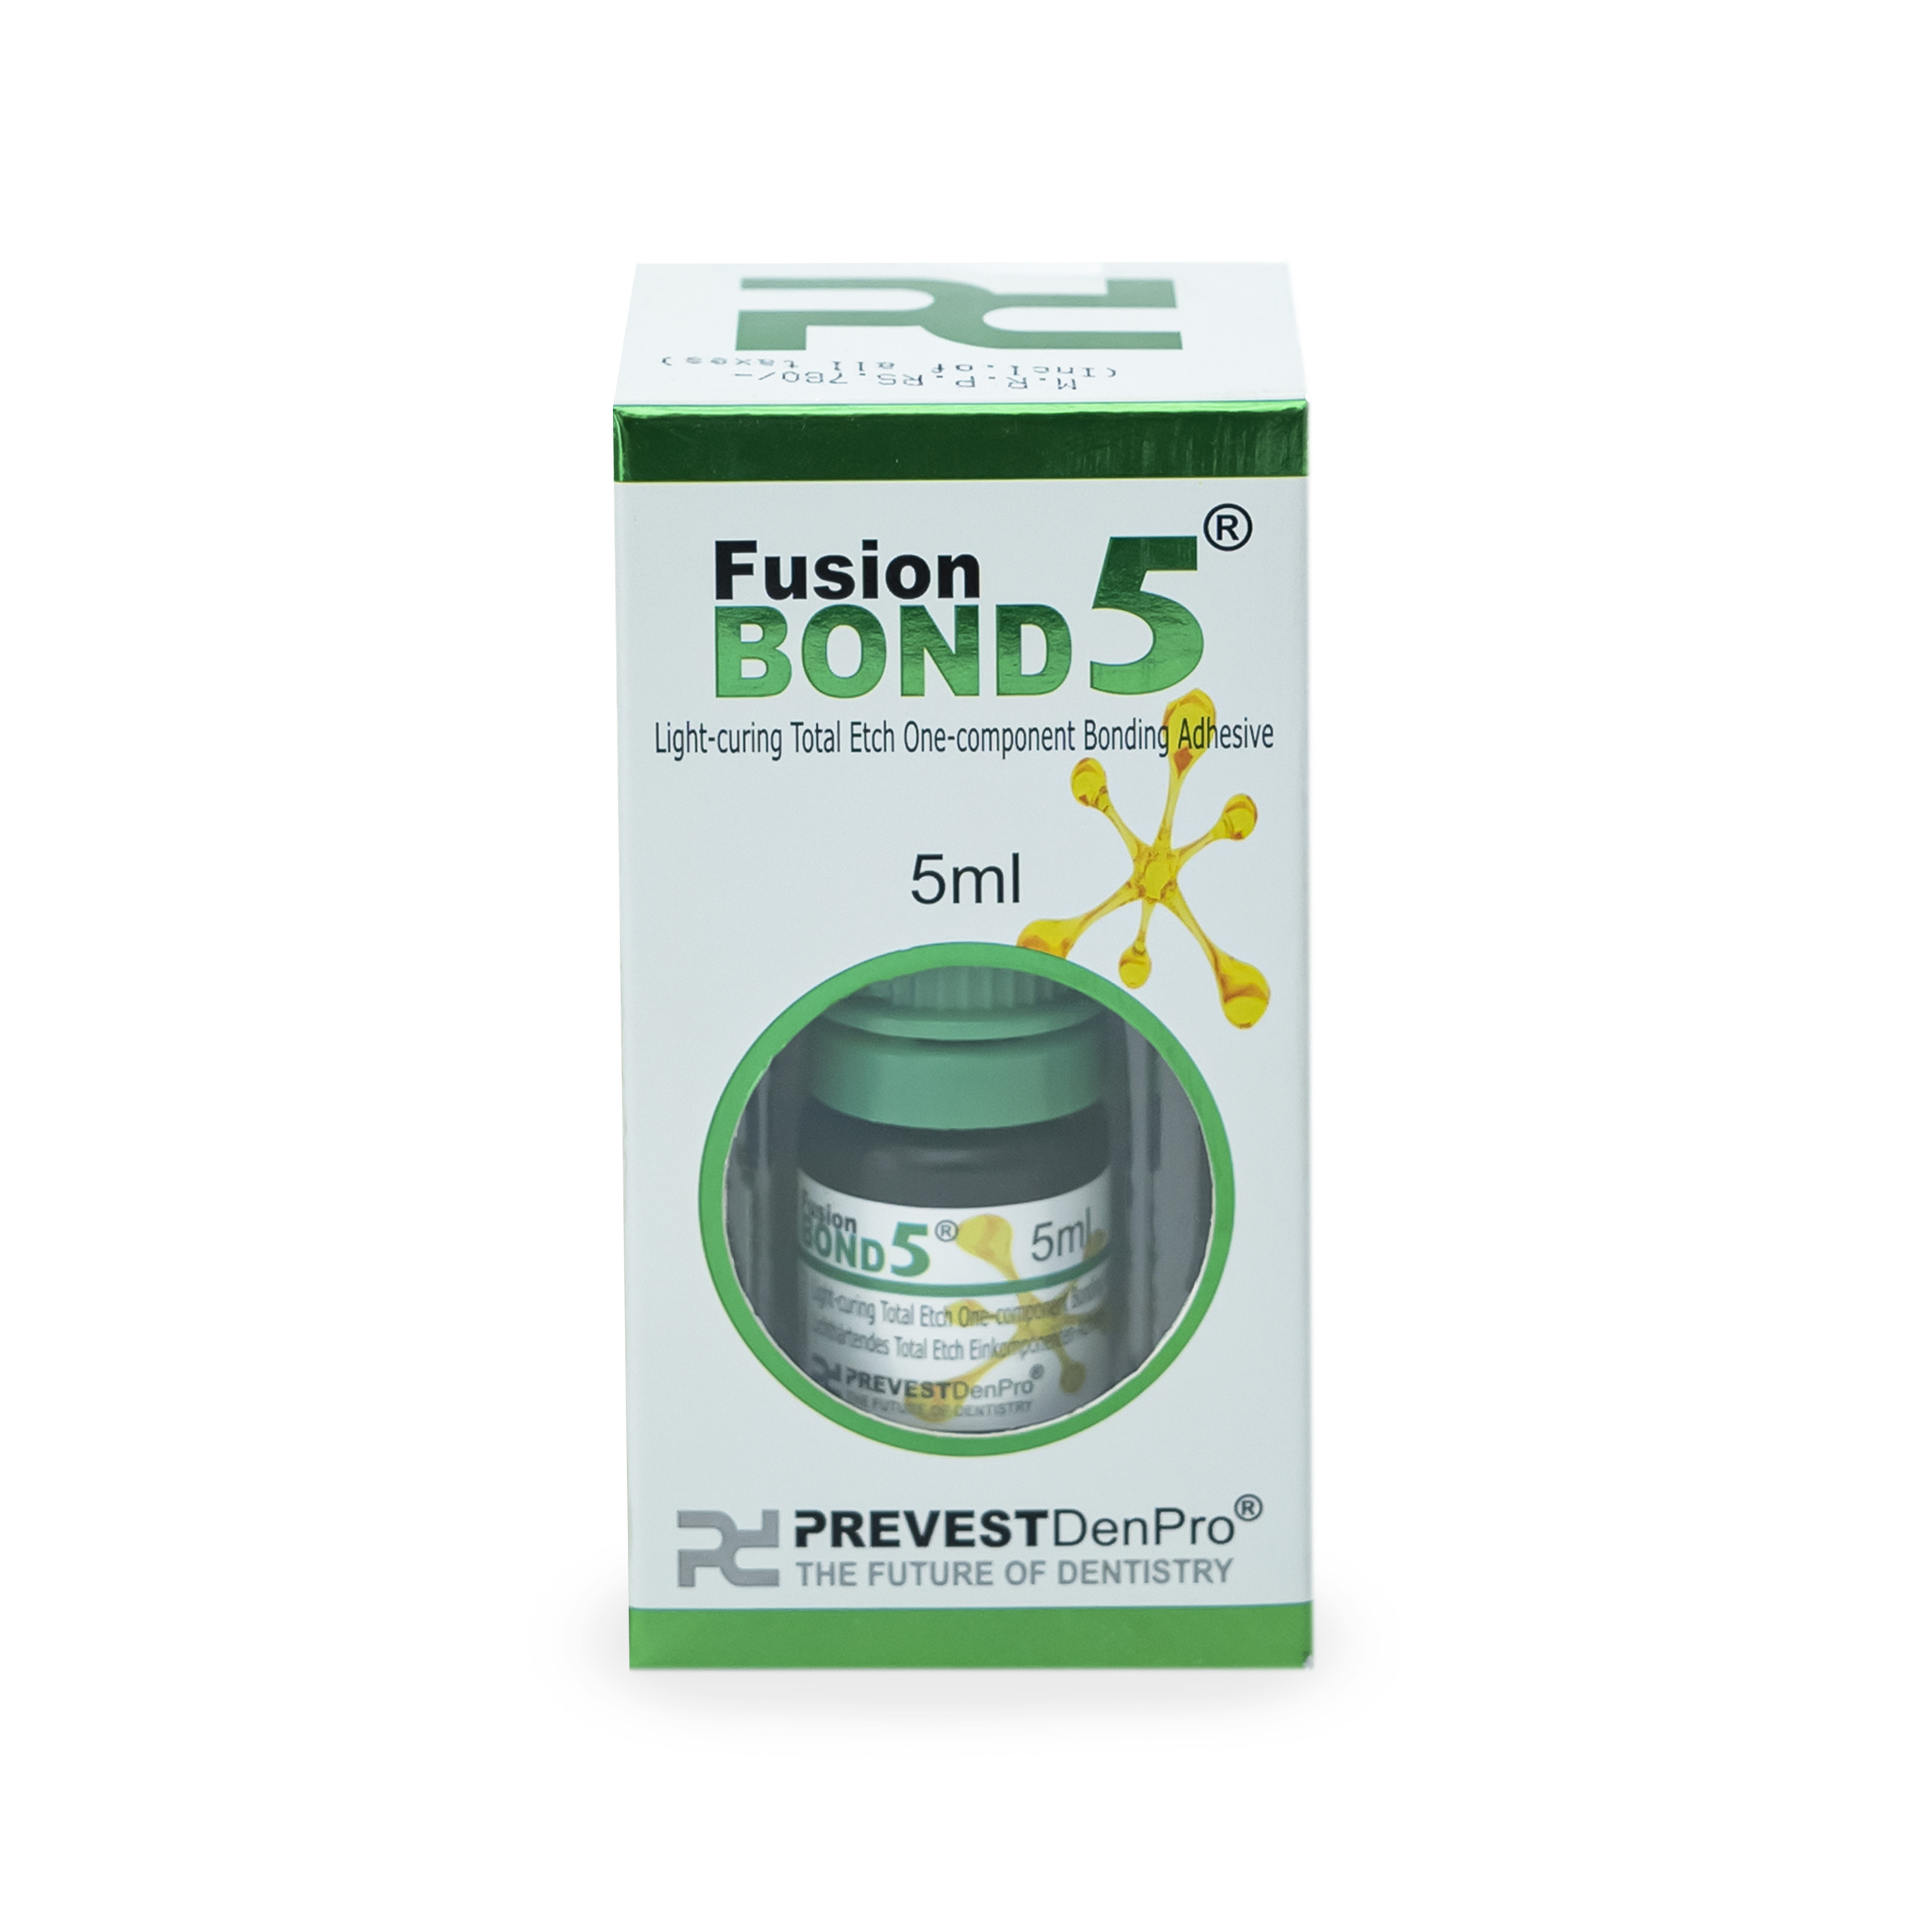 Prevest Denpro Fusion Bond 5